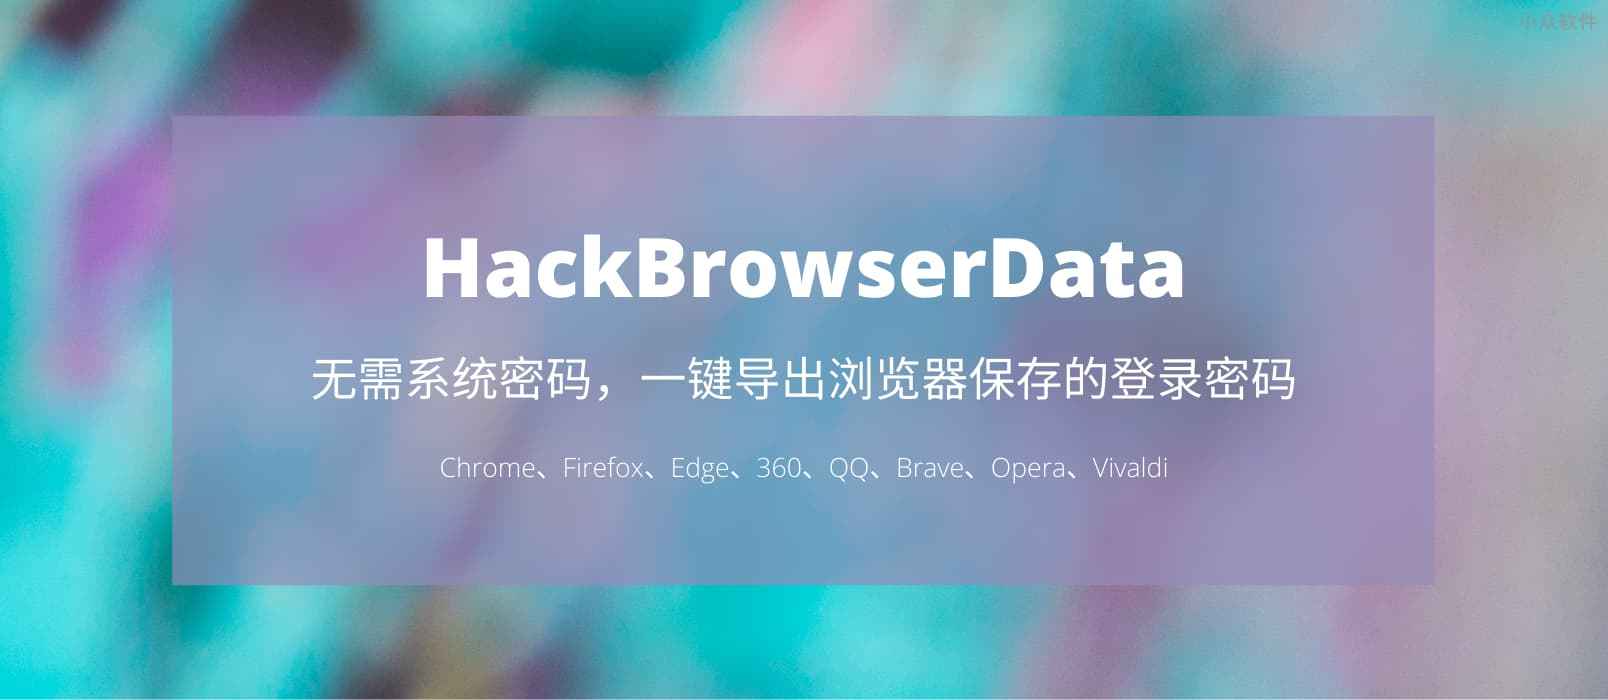 HackBrowserData - 无需密码，一键导出 Chrome、Firefox、Edge、360、QQ、Brave 浏览器保存的登录密码、历史记录、Cookies、书签